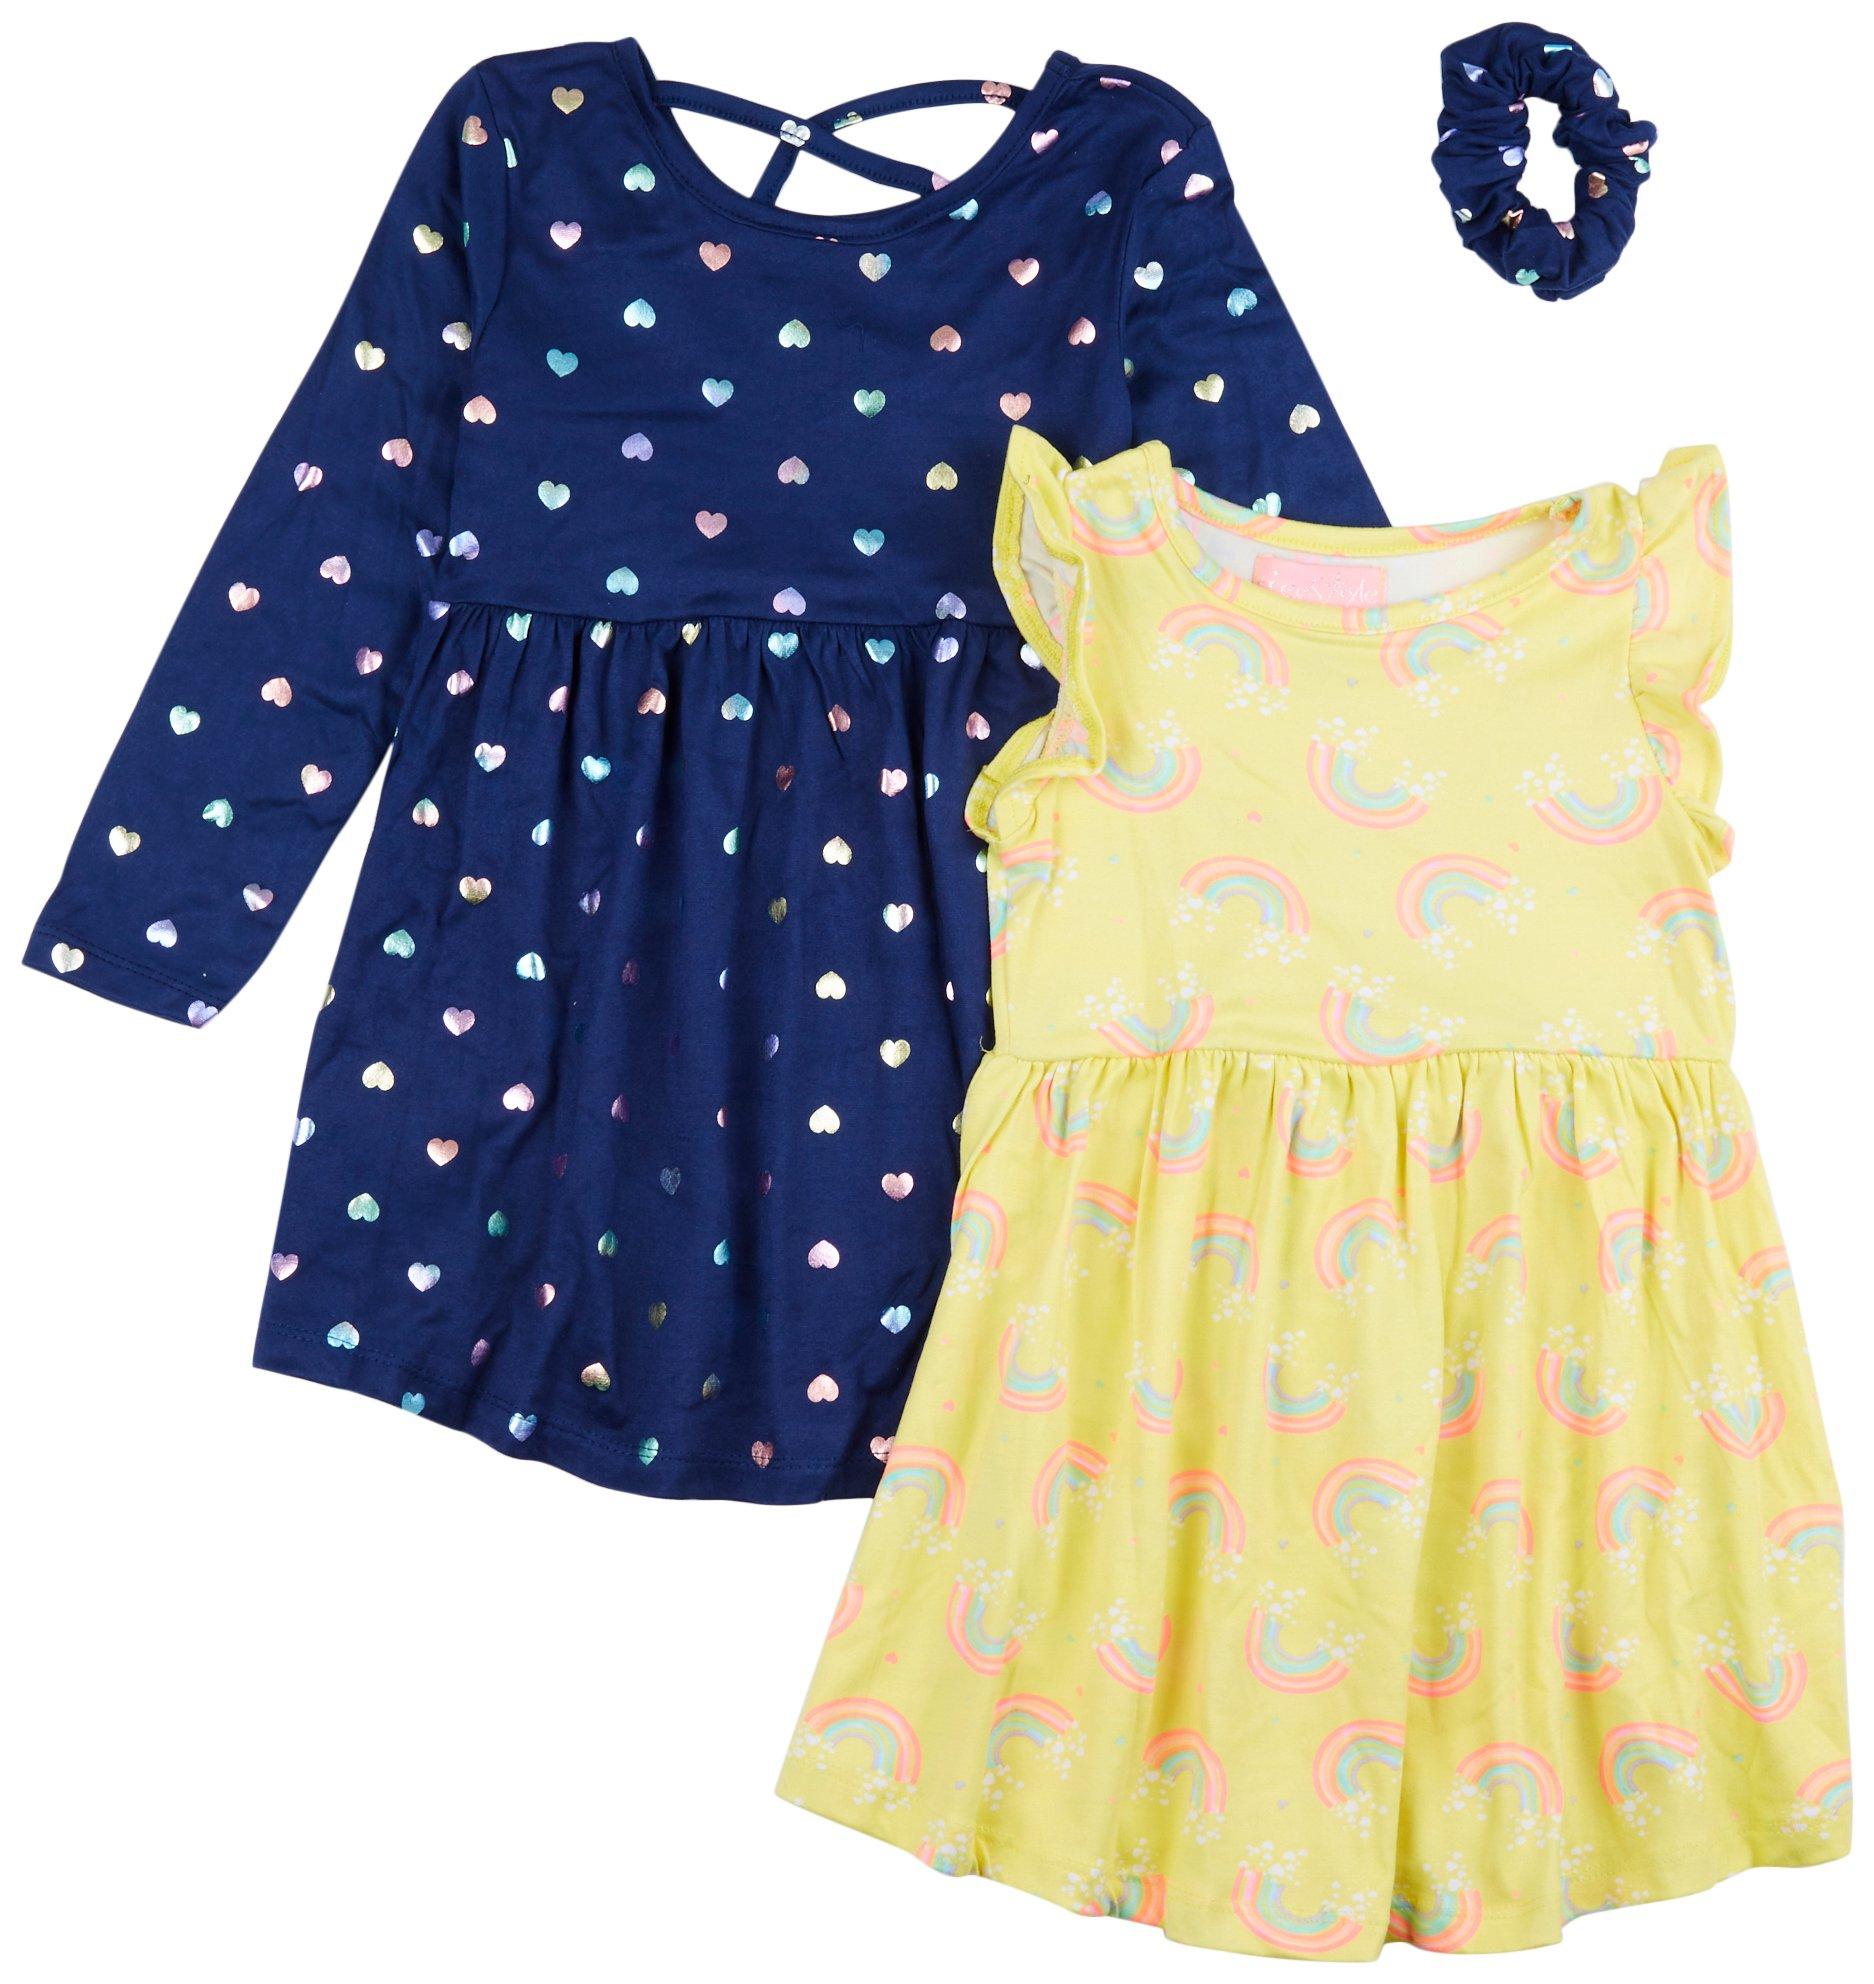 Freestyle Toddler Girls 3 Pc. Heart Rainbow Dress Set